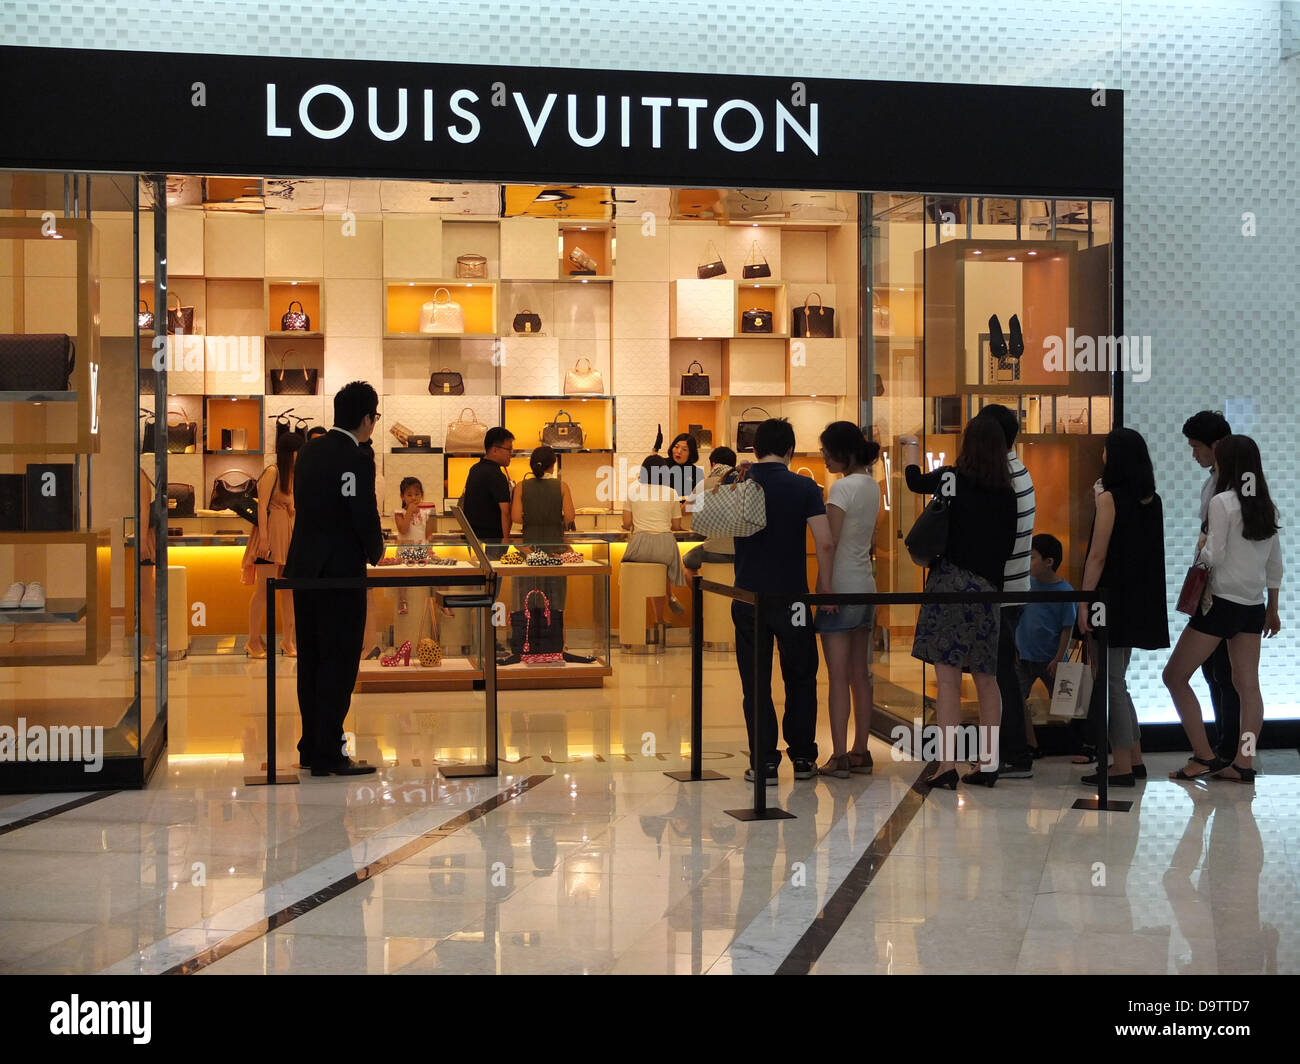 South Korea: Louis Vuitton shop in Seoul Stock Photo, Royalty Free Image: 57709043 - Alamy